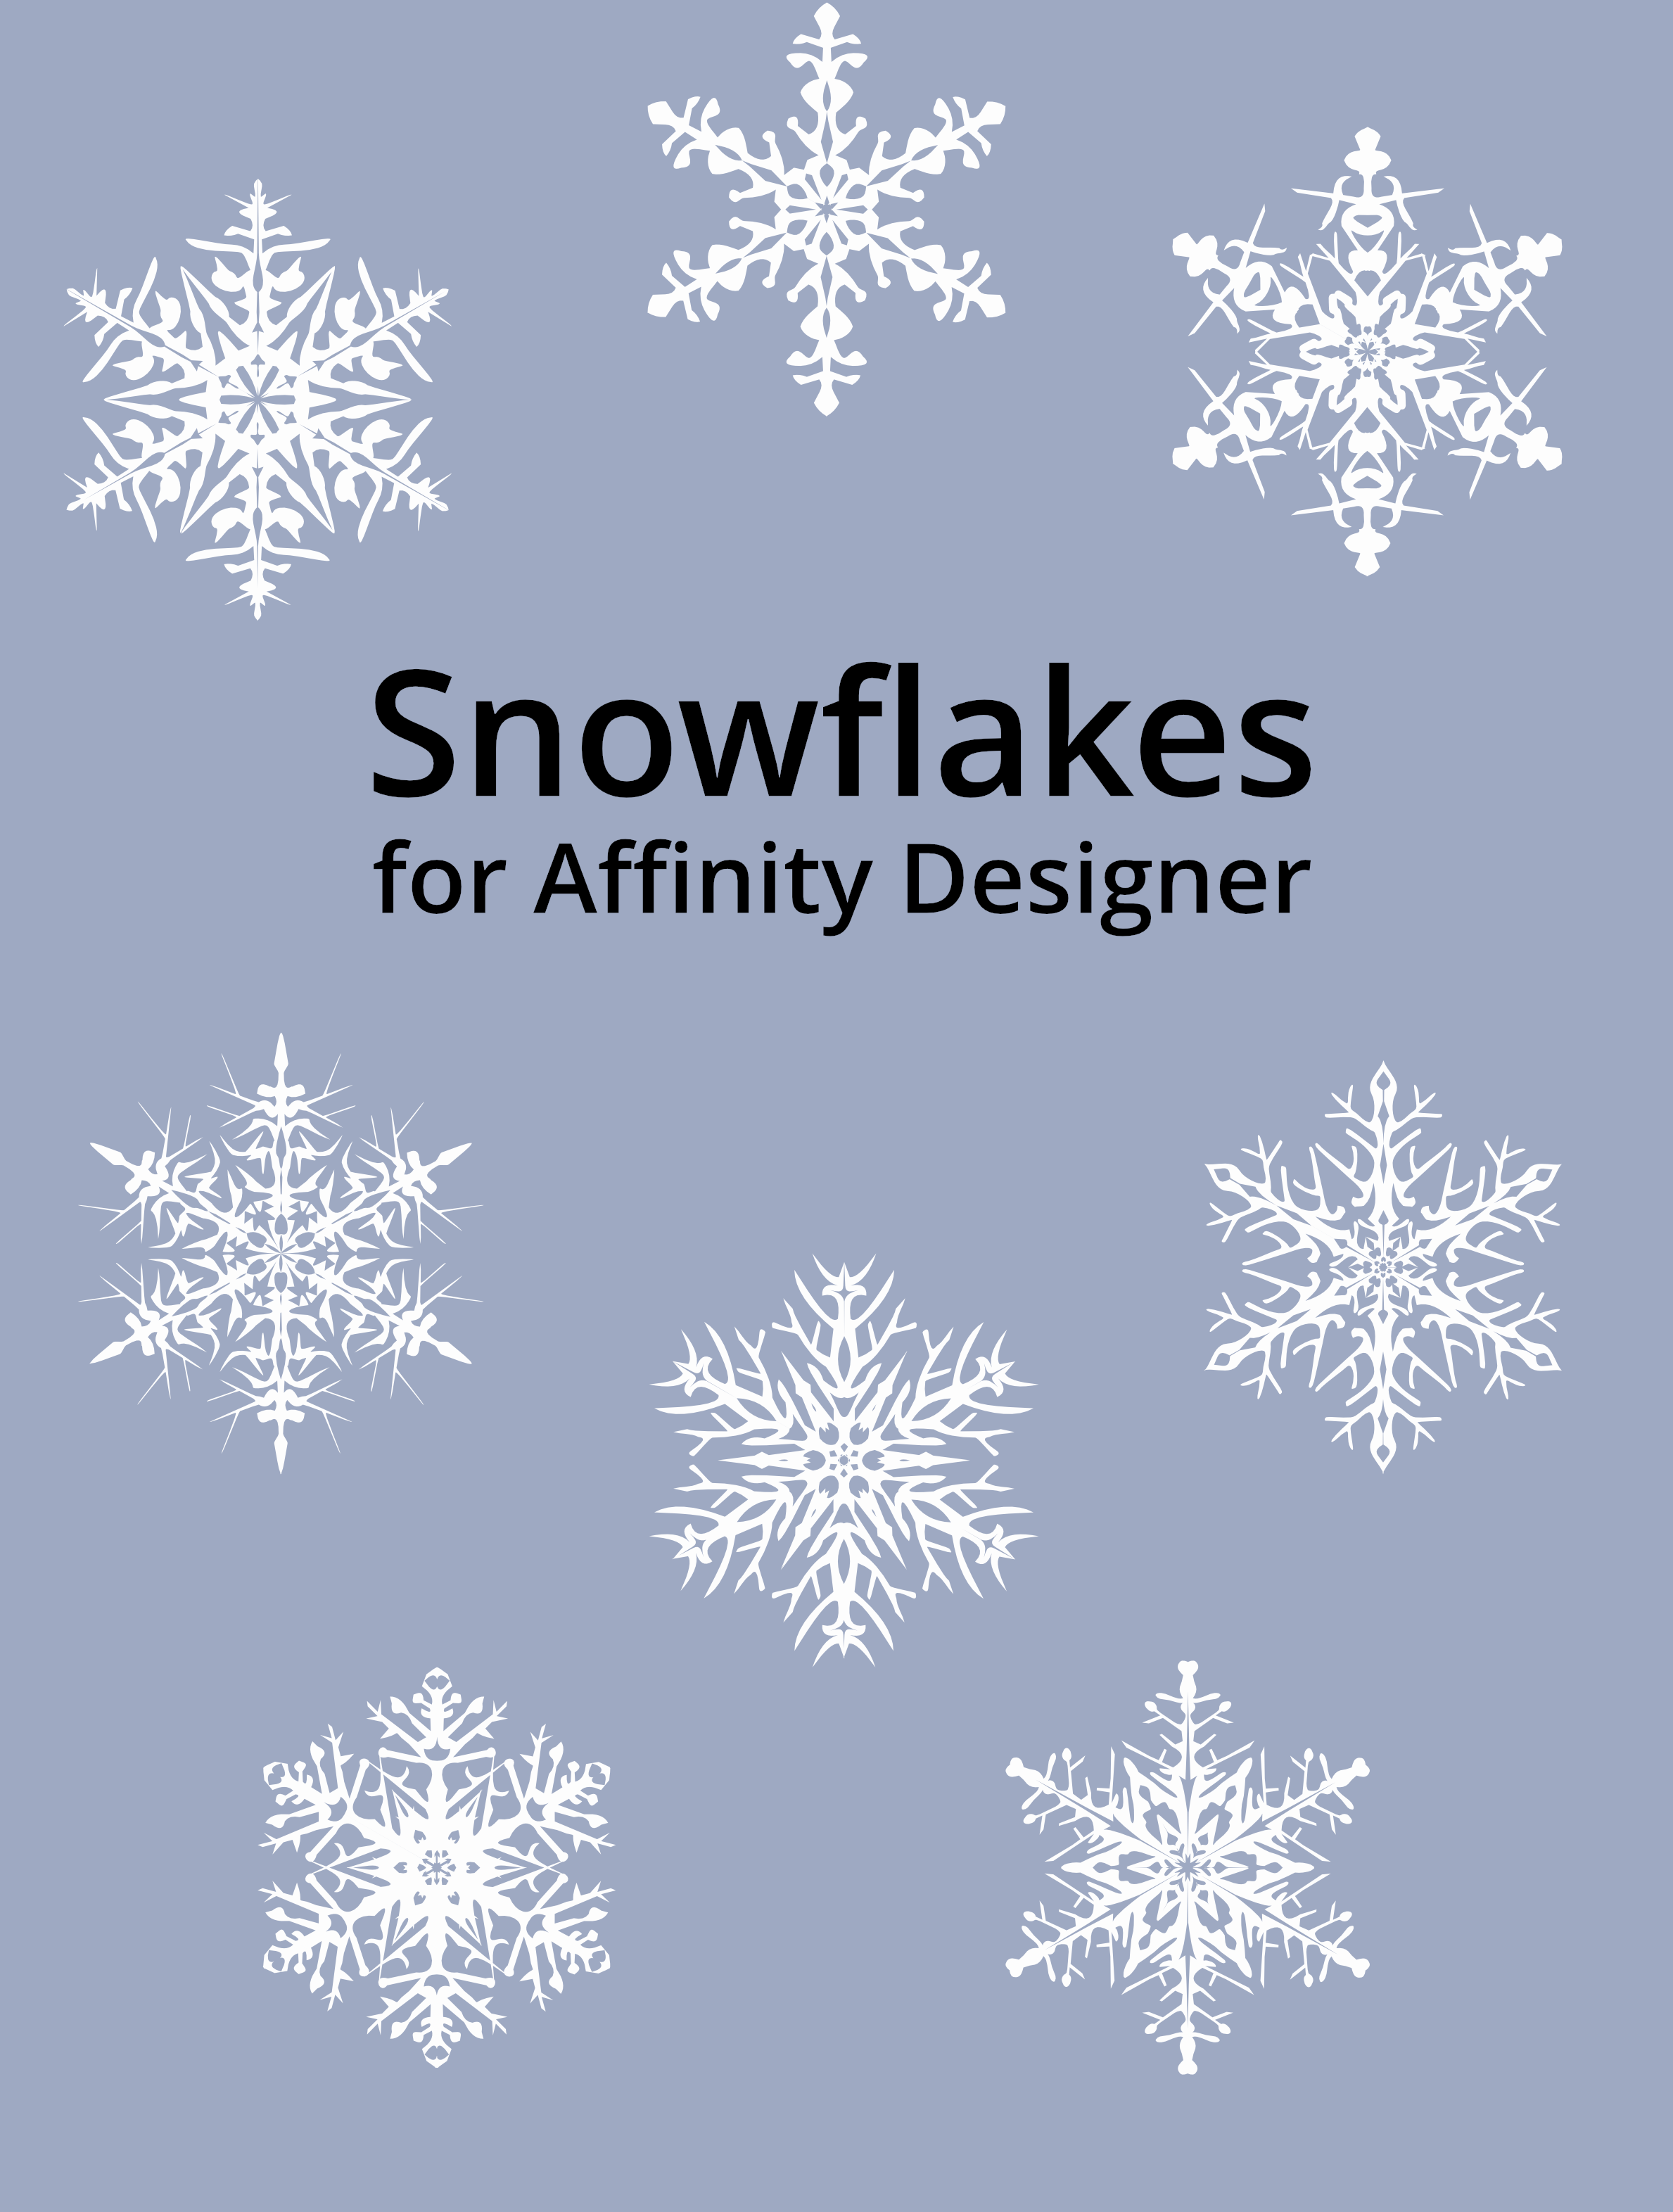 Snowflakes - Resources - Affinity | Forum